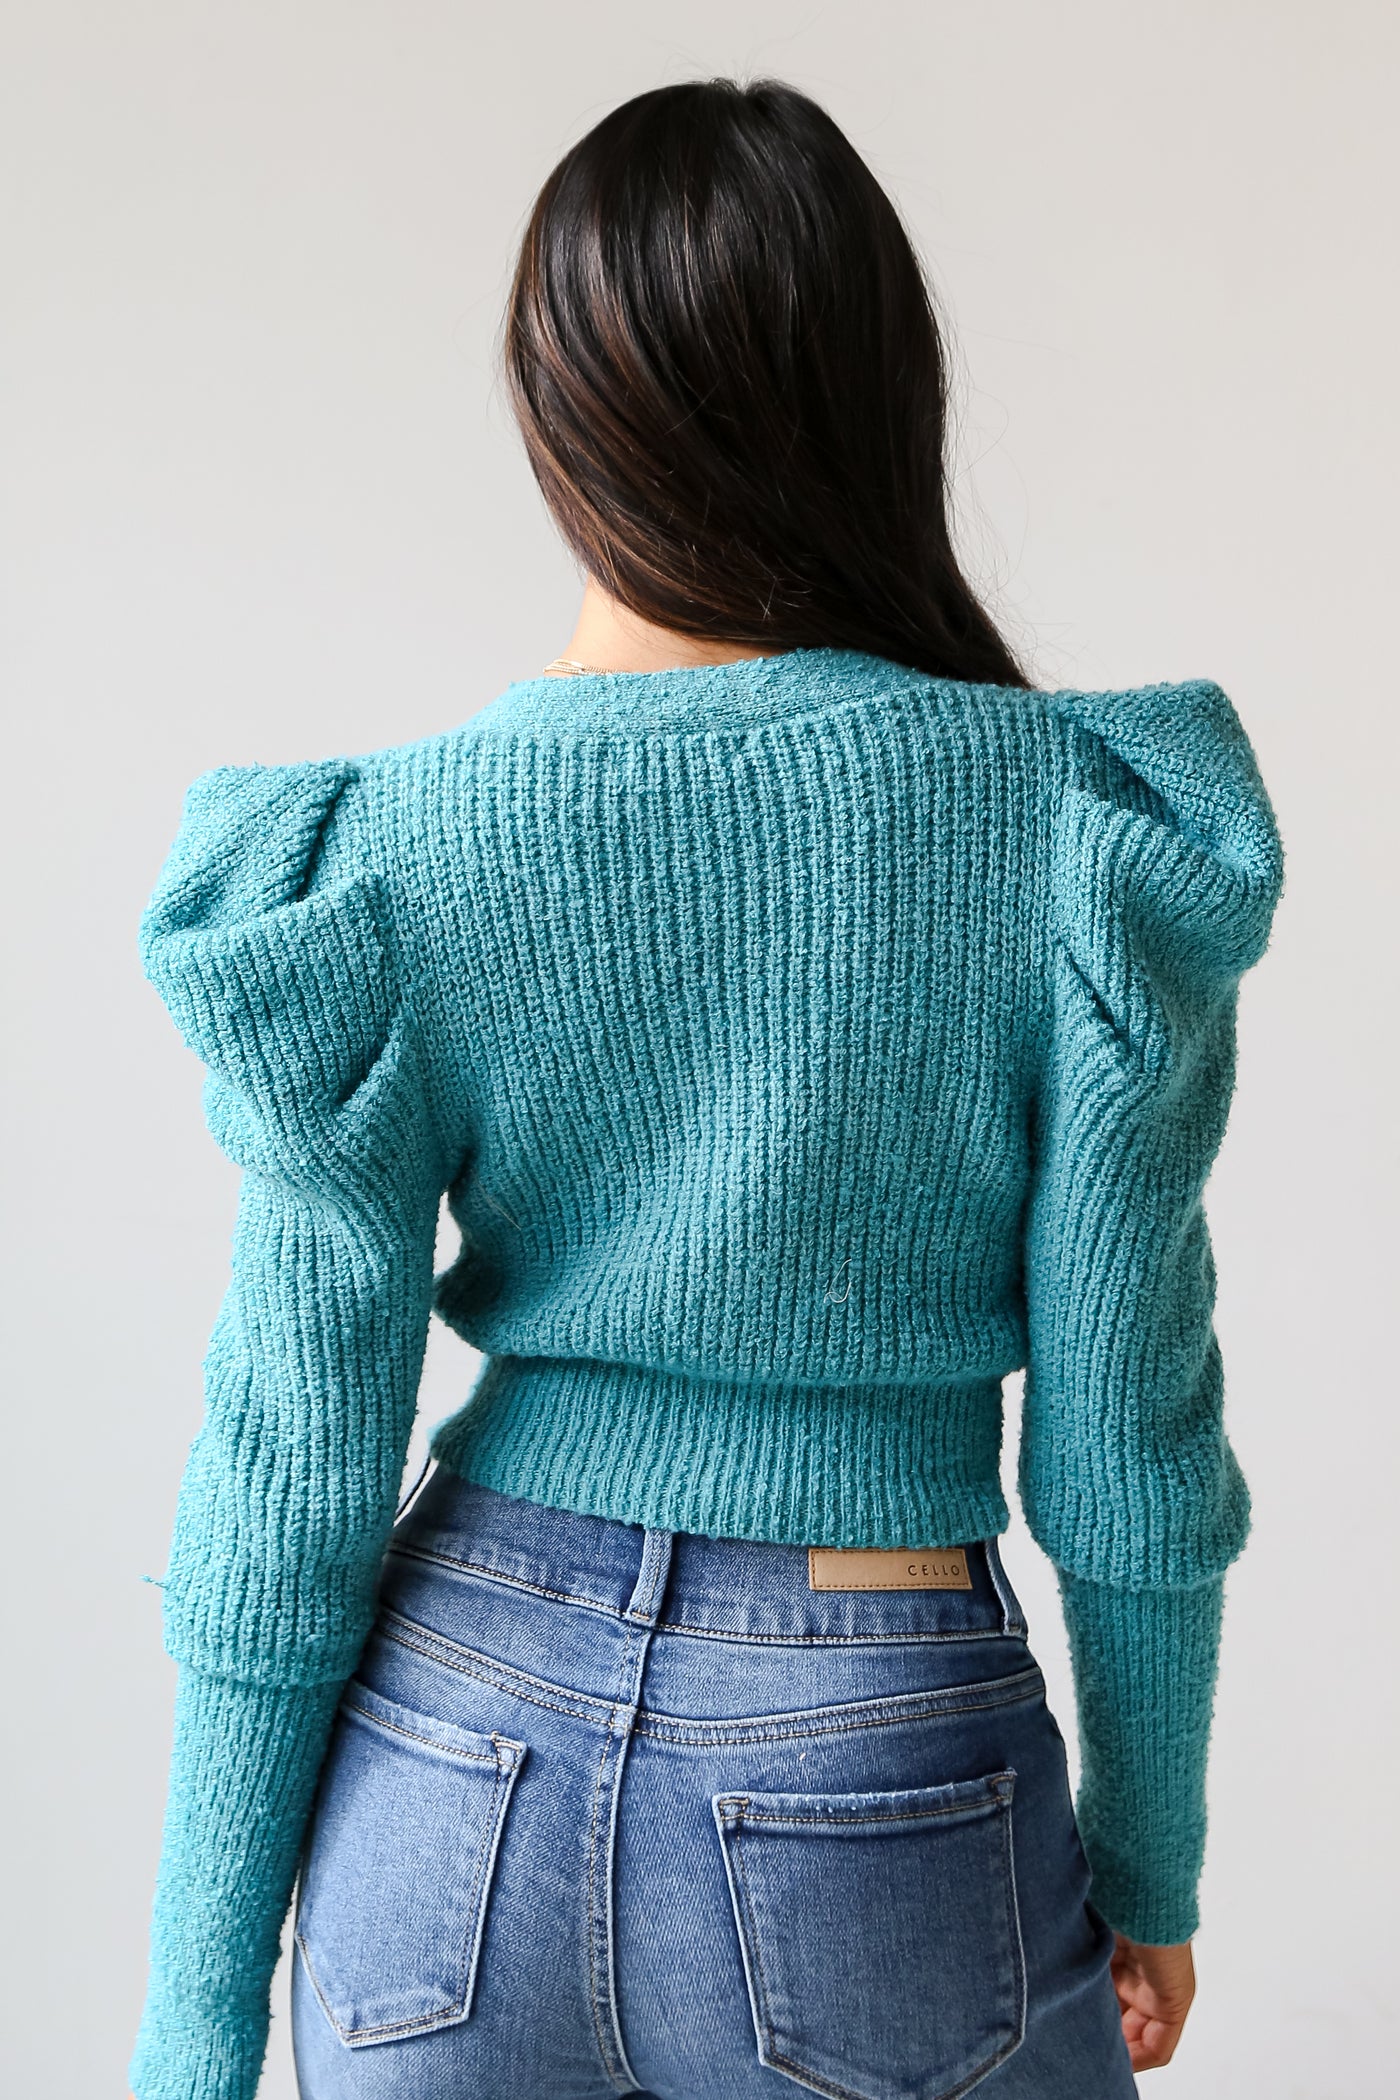 blue sweaters